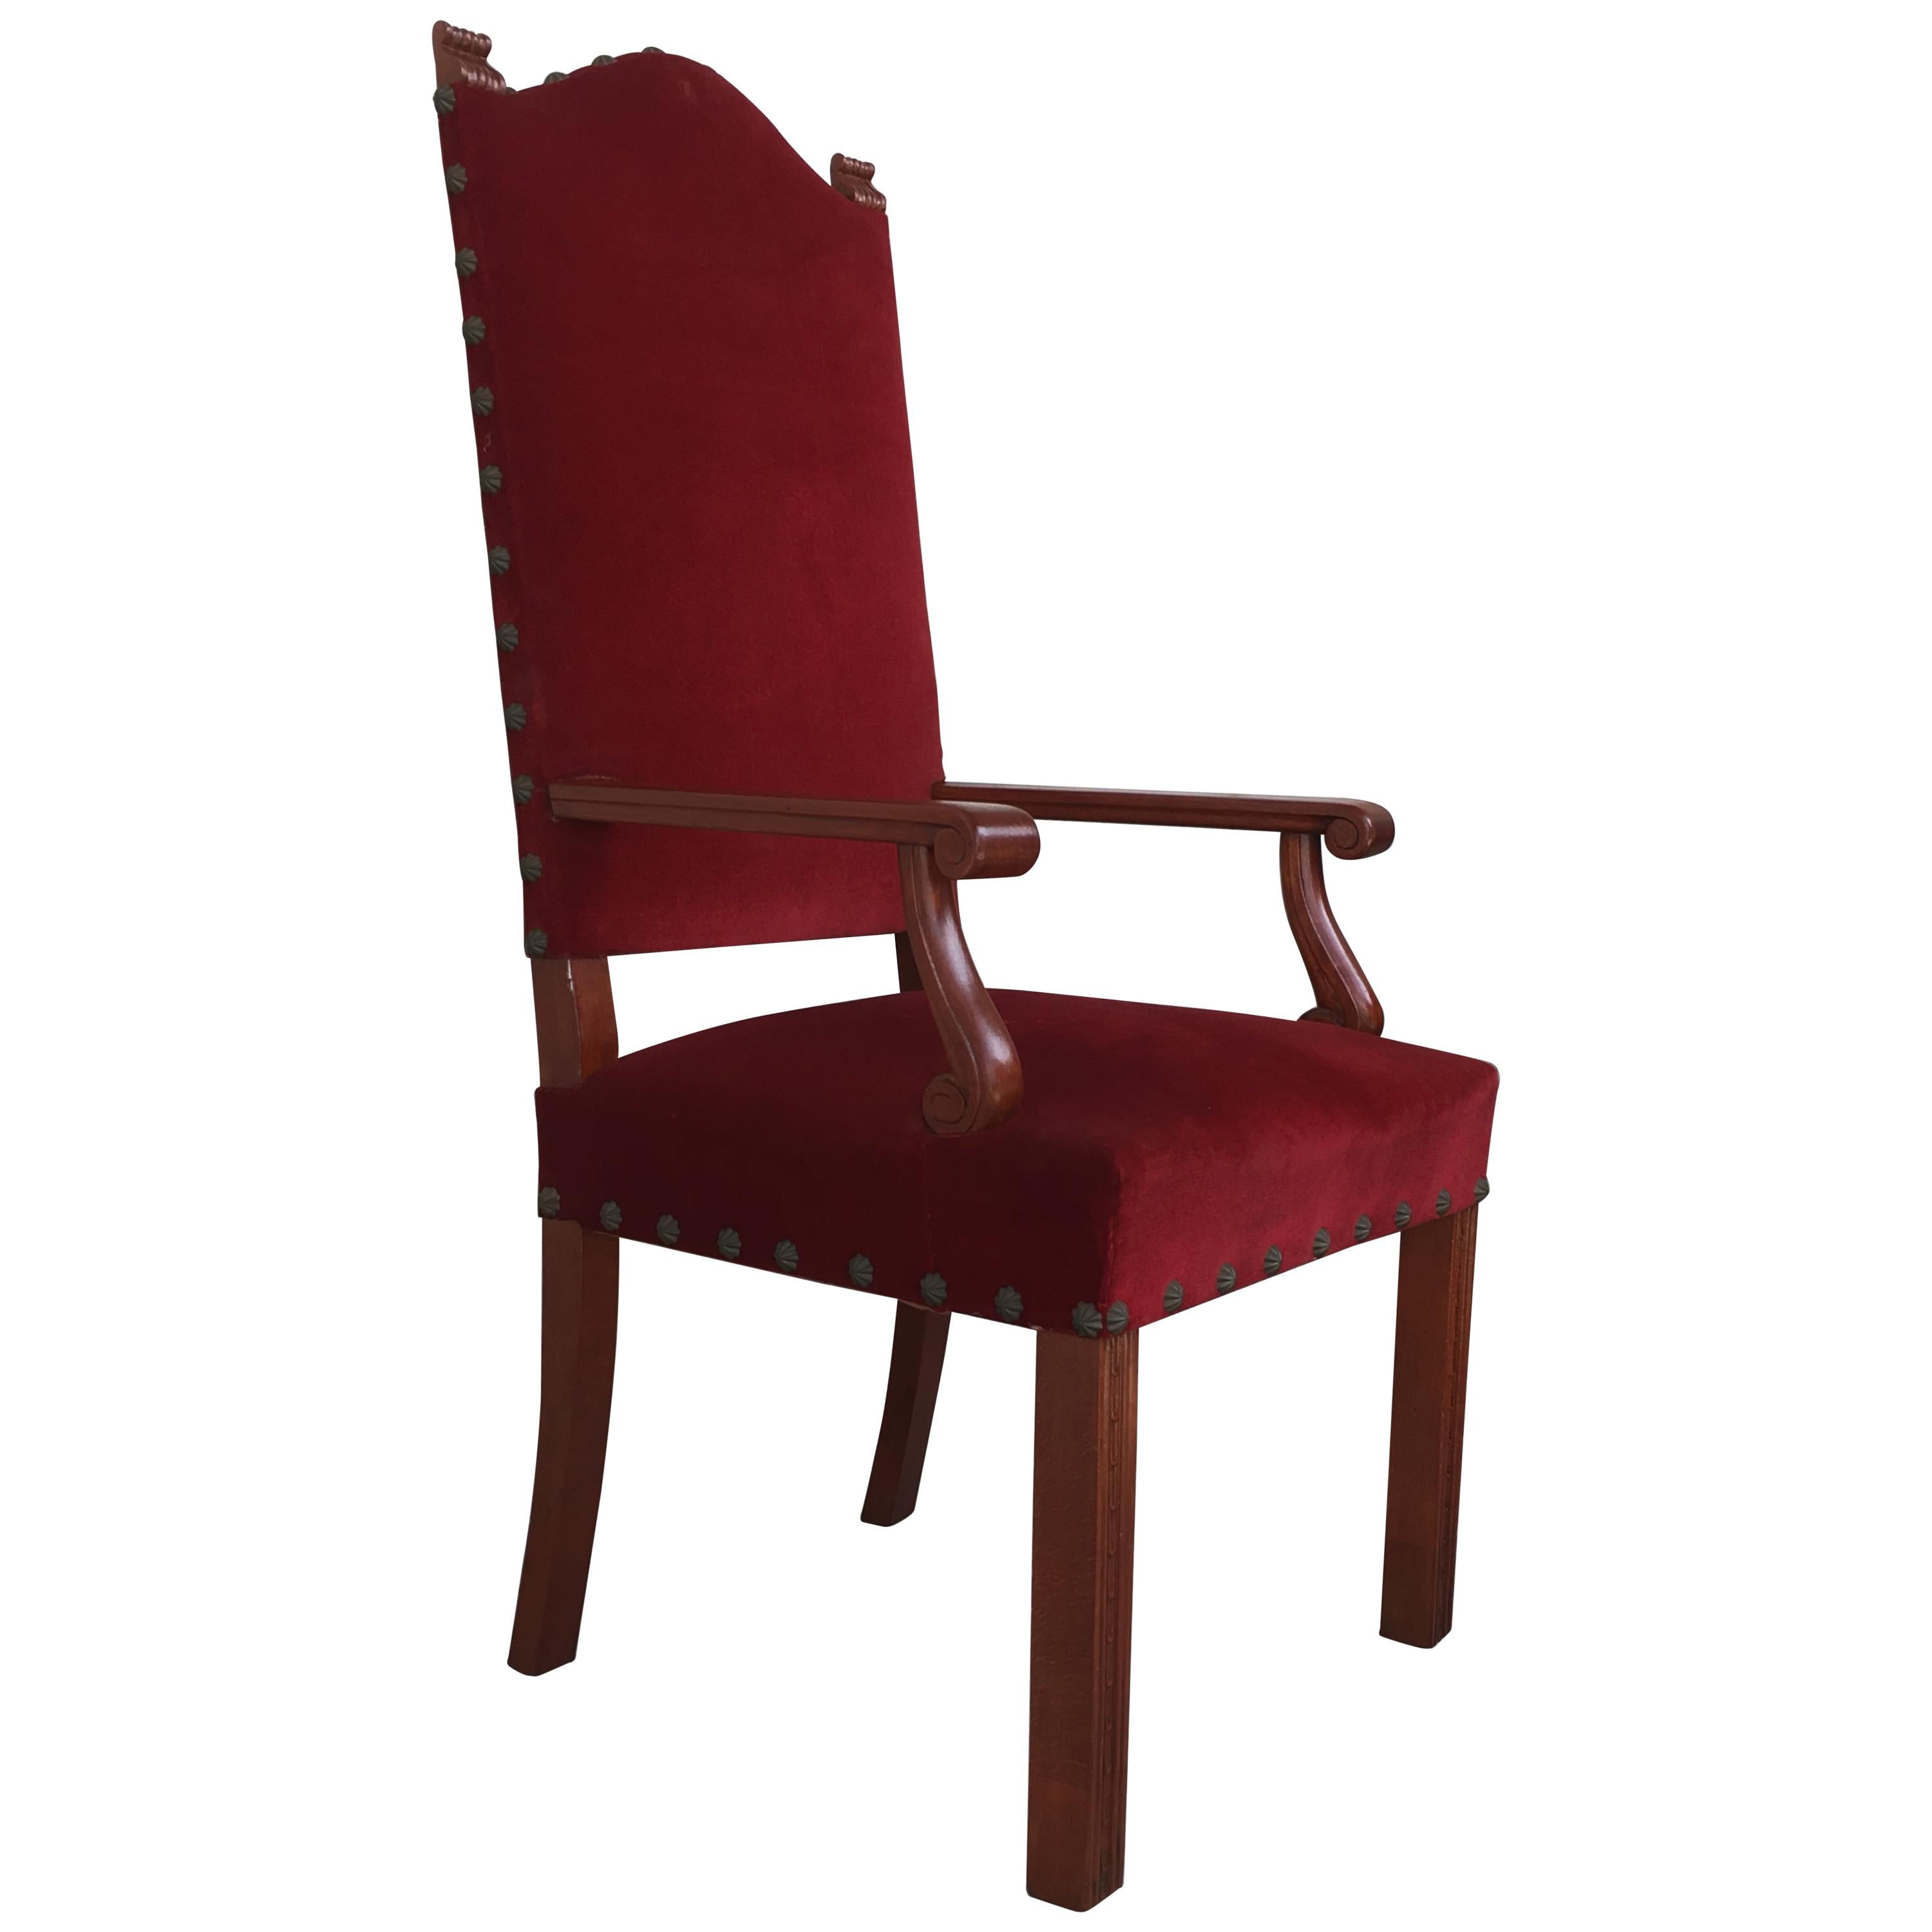 19th Century Spanish Revival High Back Armchair with Red Velvet Upholstery